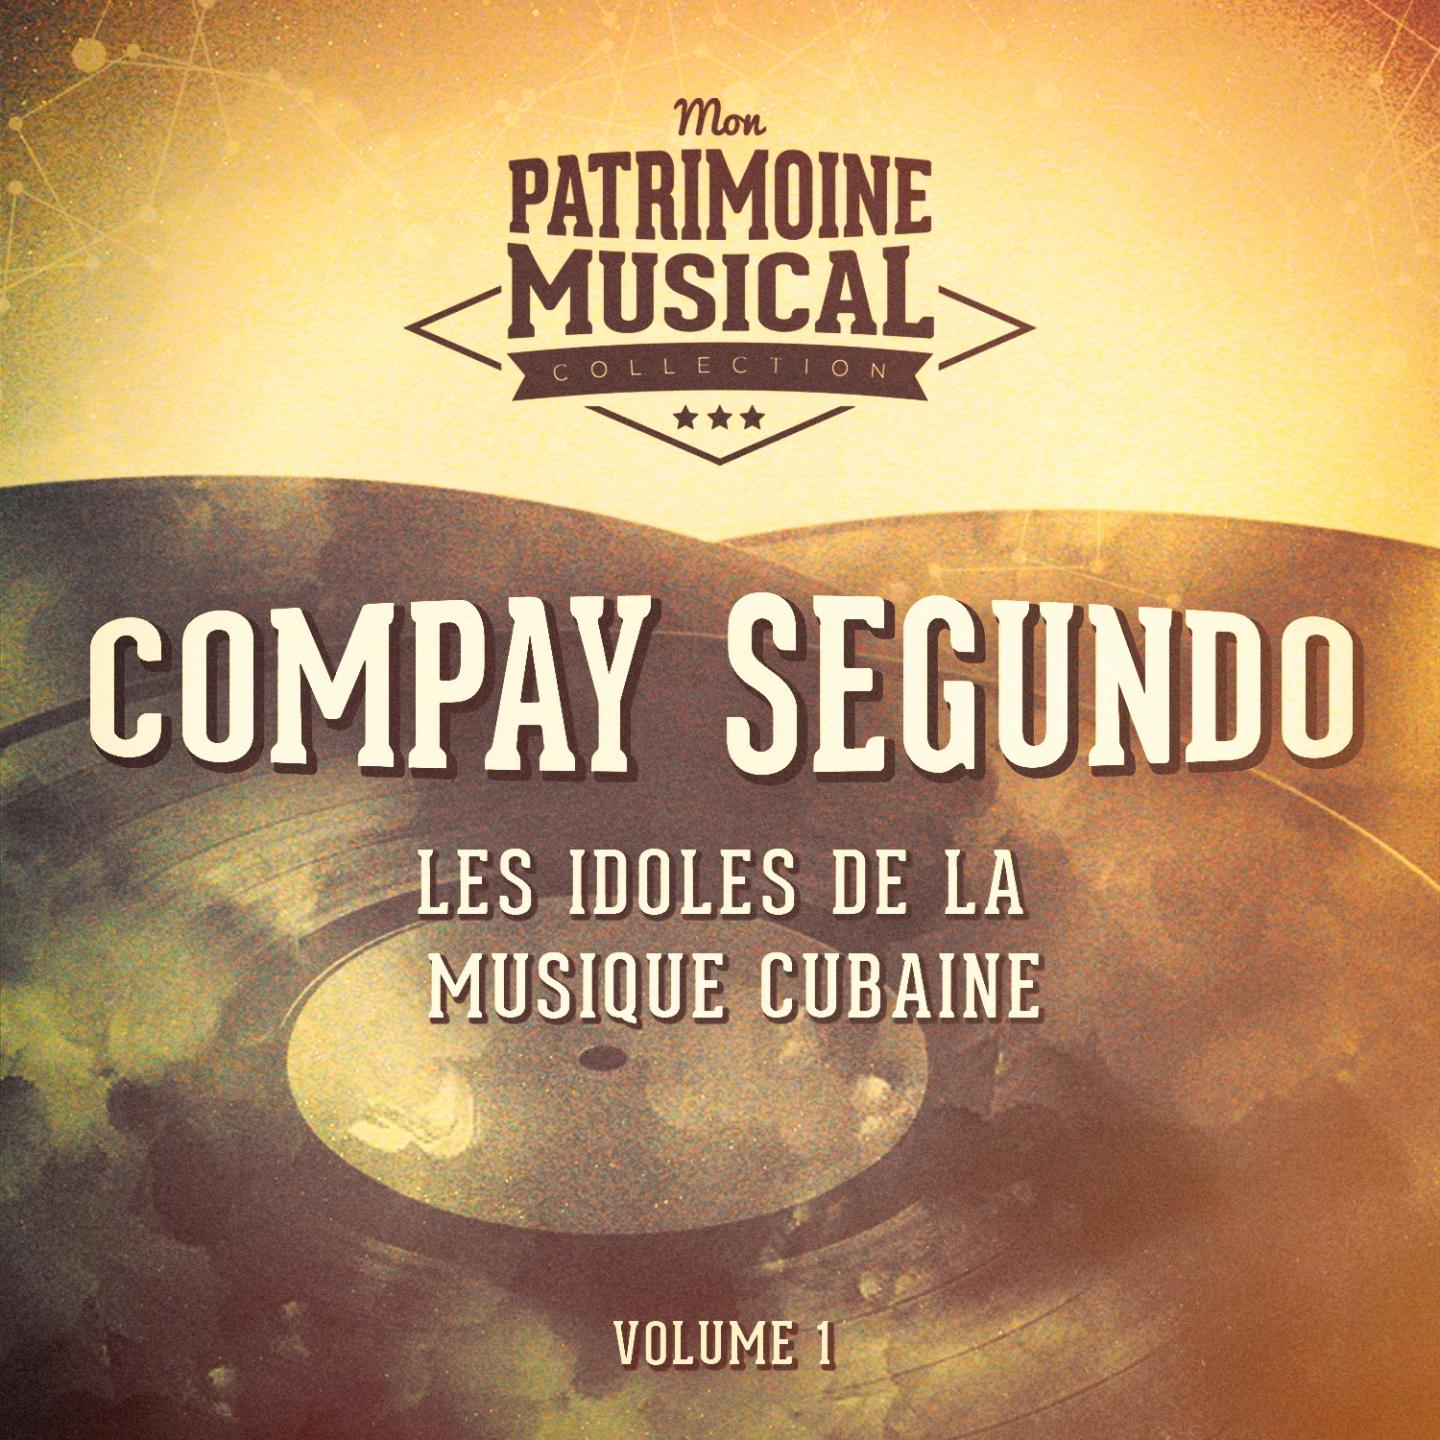 Les idoles de la musique cubaine : Compay Segundo, Vol. 1